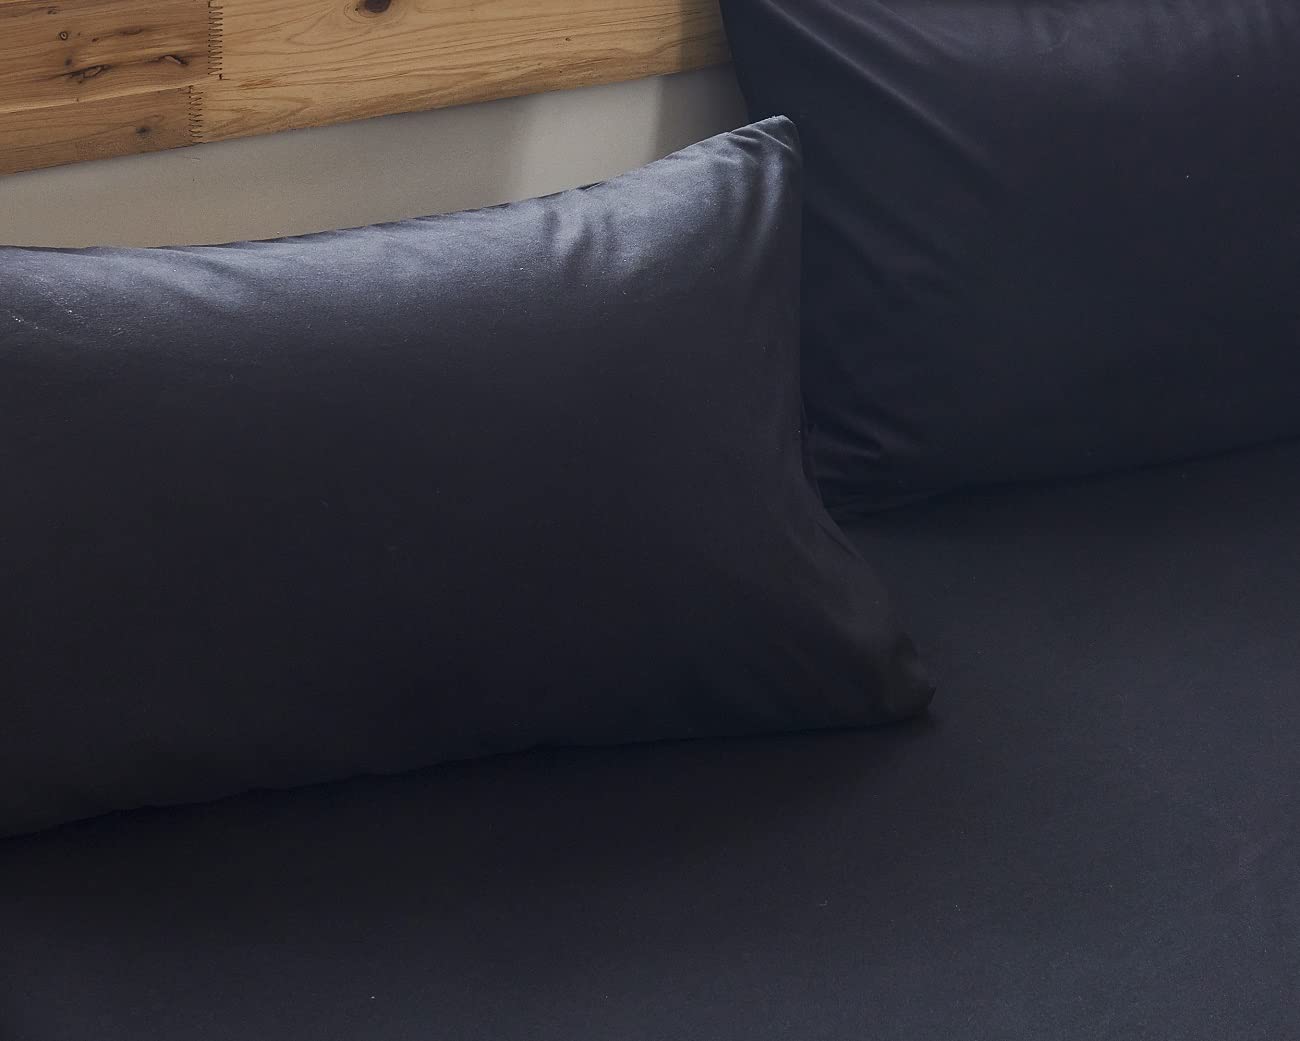 YOYOSTAR枕カバー 2枚セット 43x63cm ピローケース 封筒式 合わせ式 綿混 無地 防ダニ 防シワ 毛玉なし ブラック